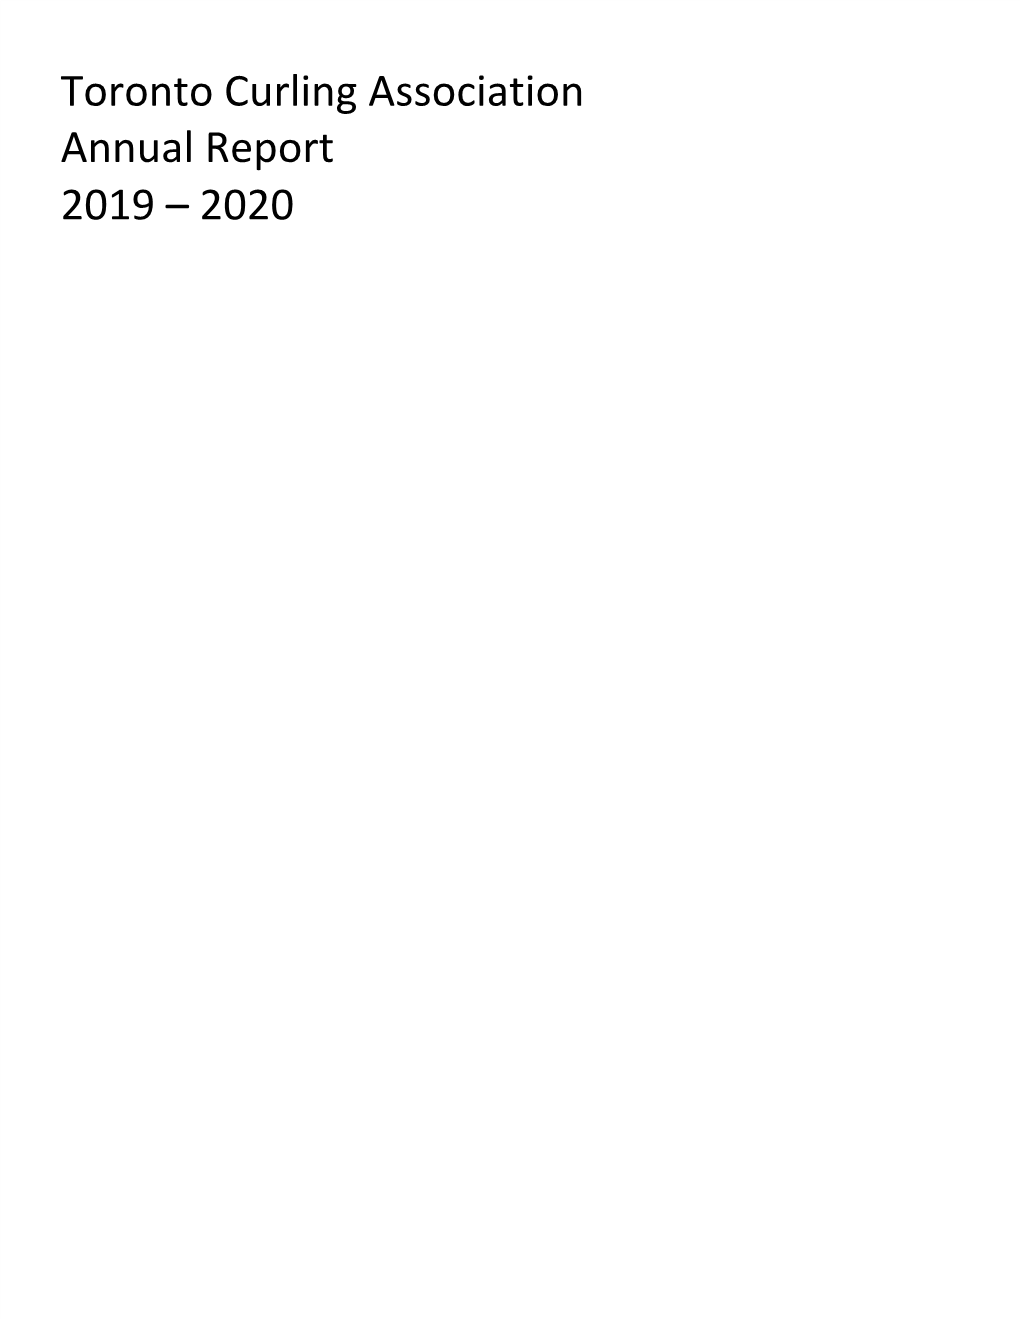 Toronto Curling Association Annual Report 2019 – 2020